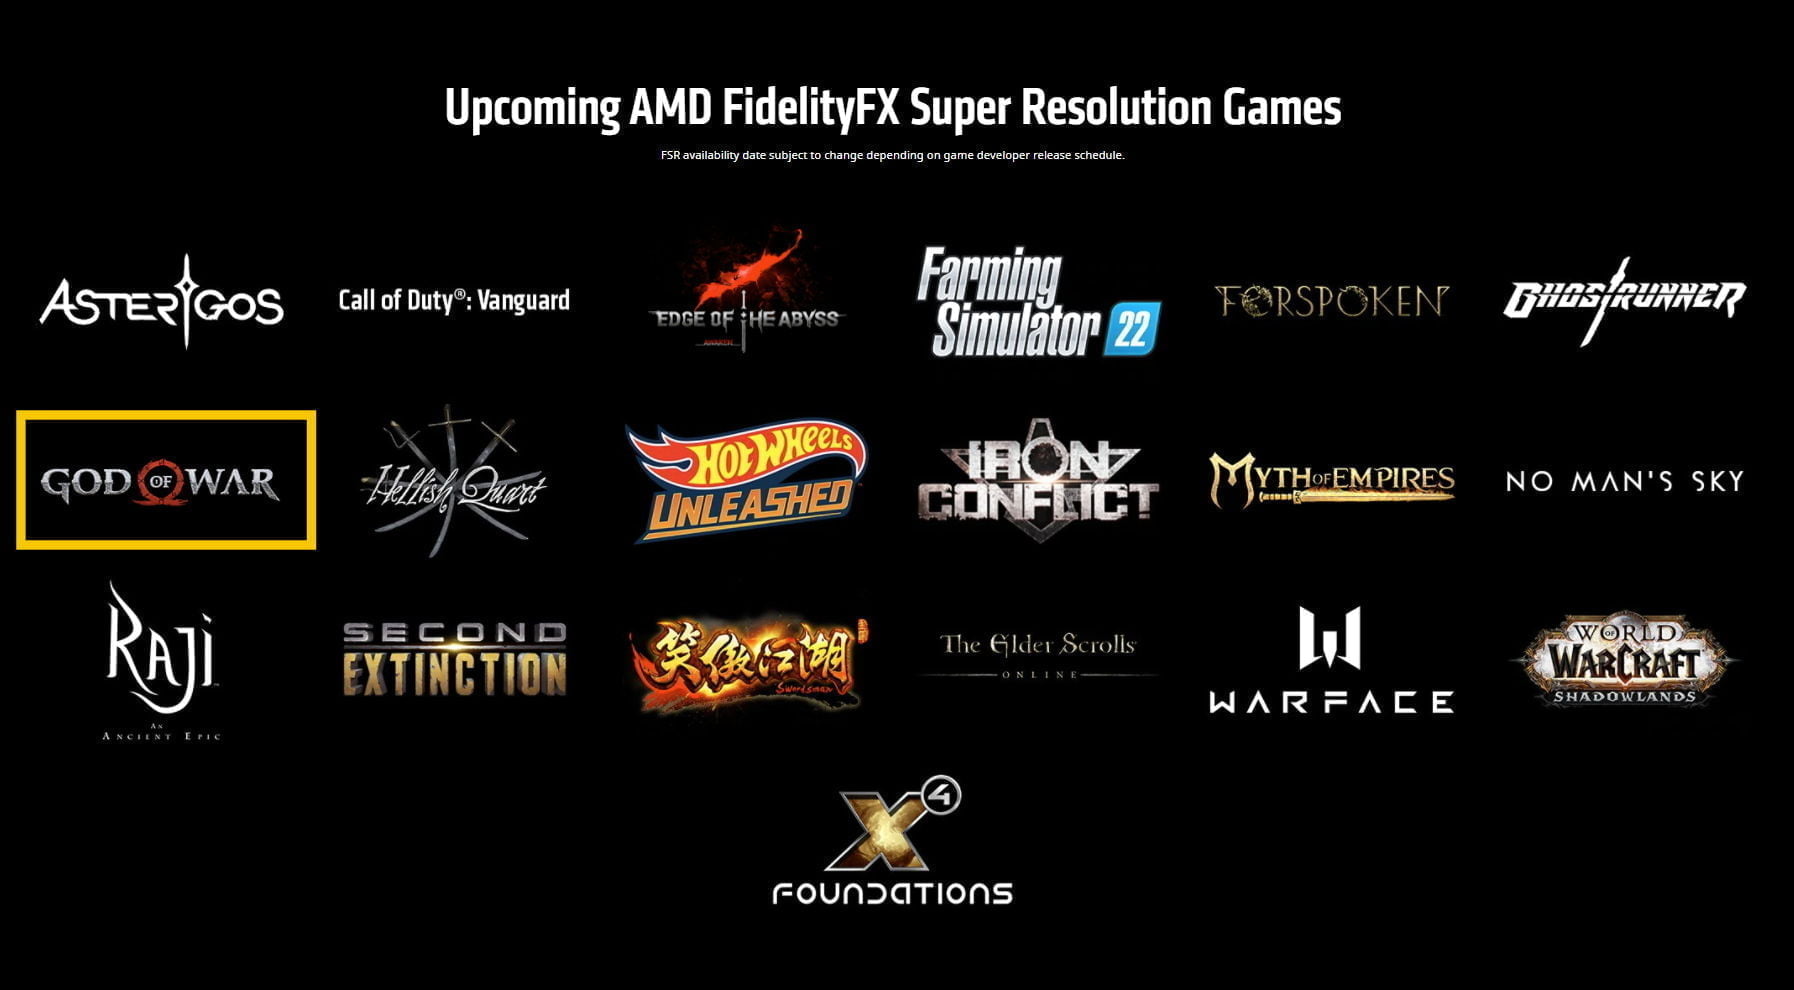 God of War PC sẽ hỗ trợ NVIDIA DLSS lẫn AMD FSR ngay khi ra mắt - Image 2